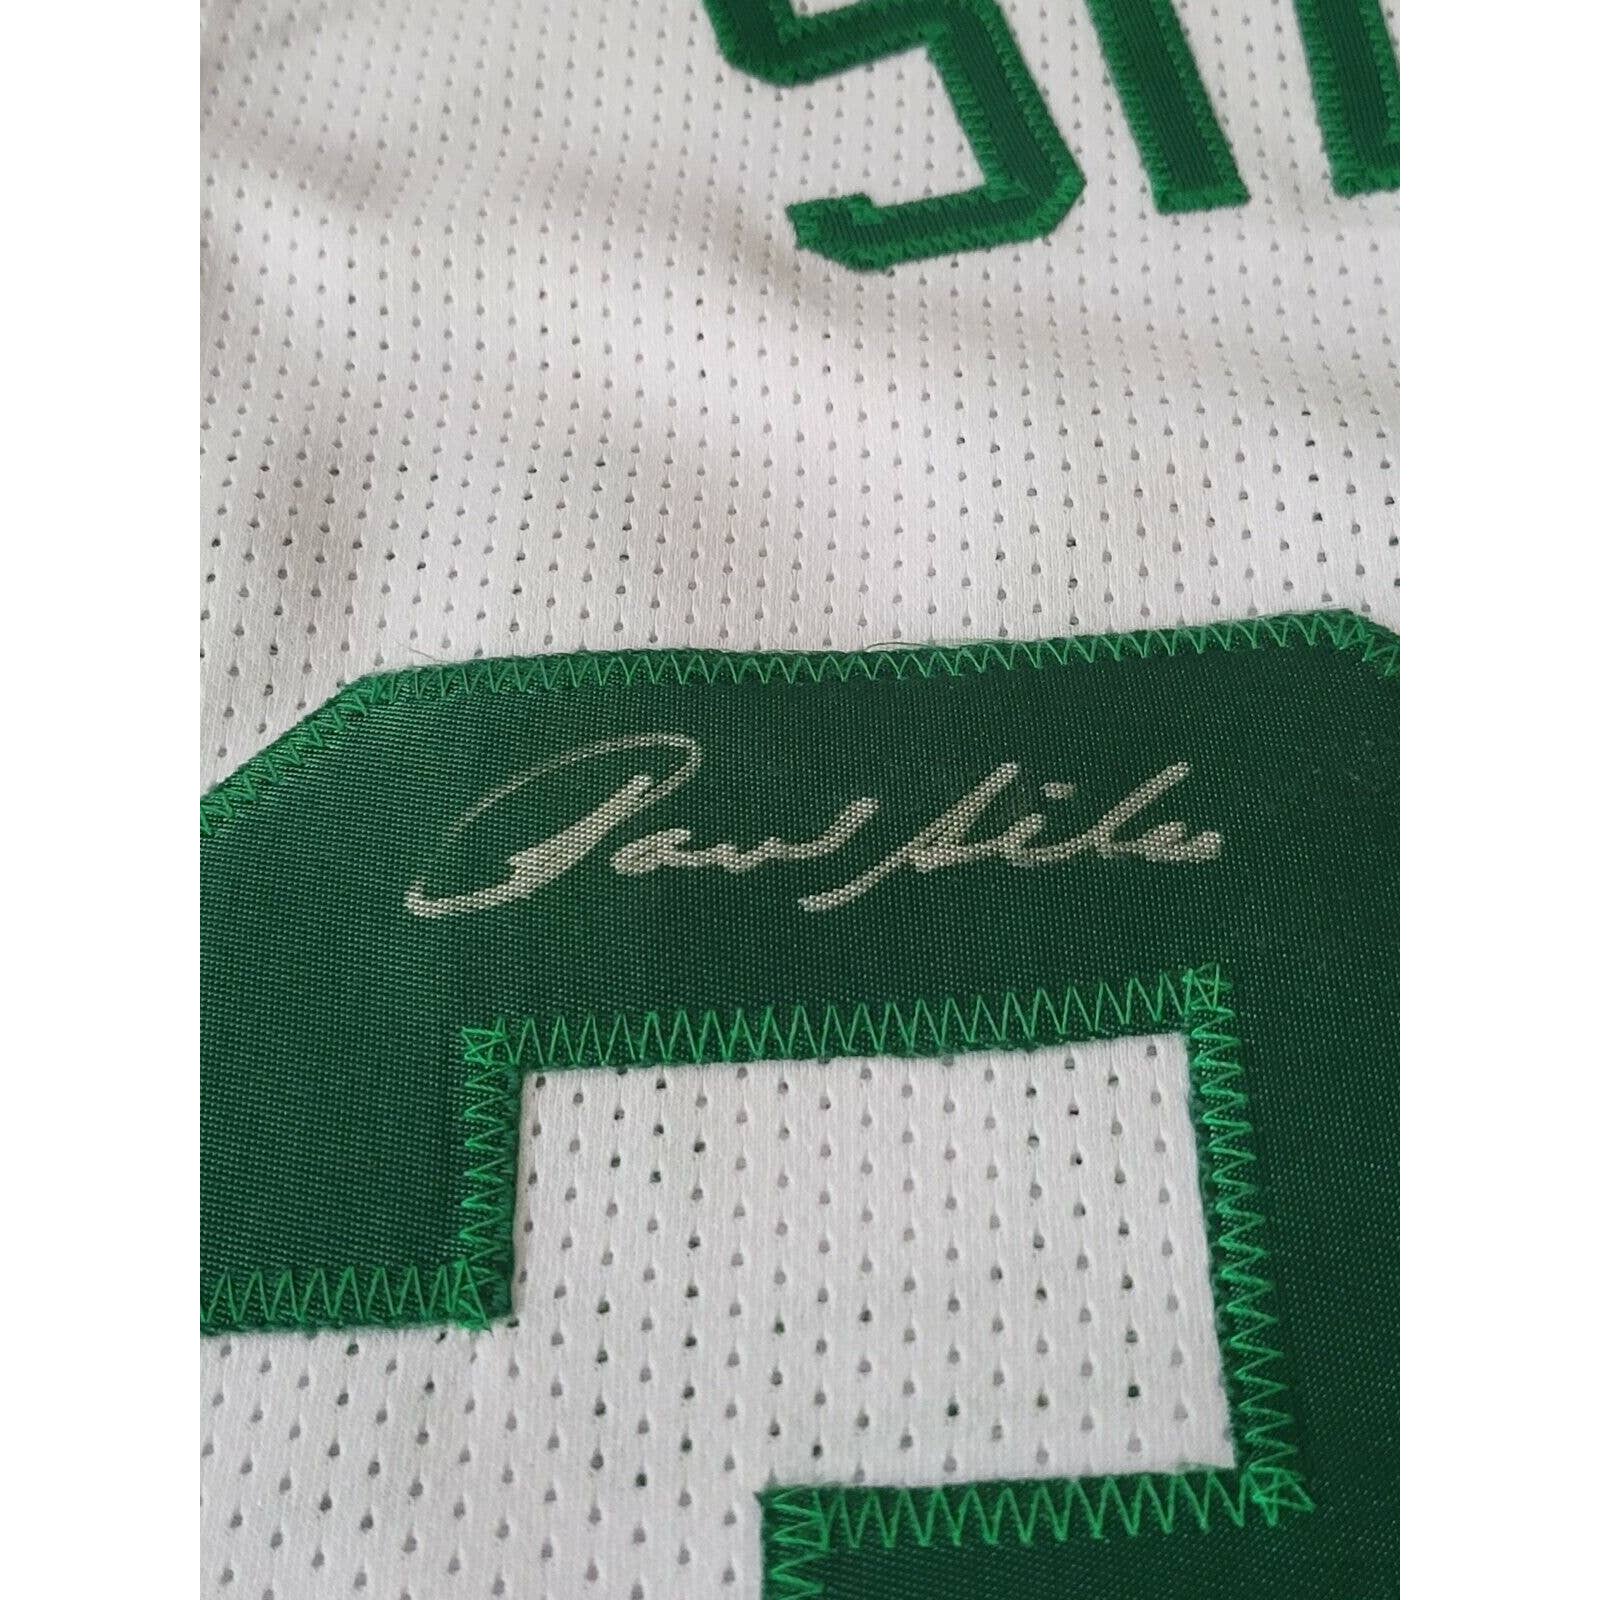 Paul Silas Autographed/Signed Jersey JSA COA Boston Celtics - TreasuresEvolved